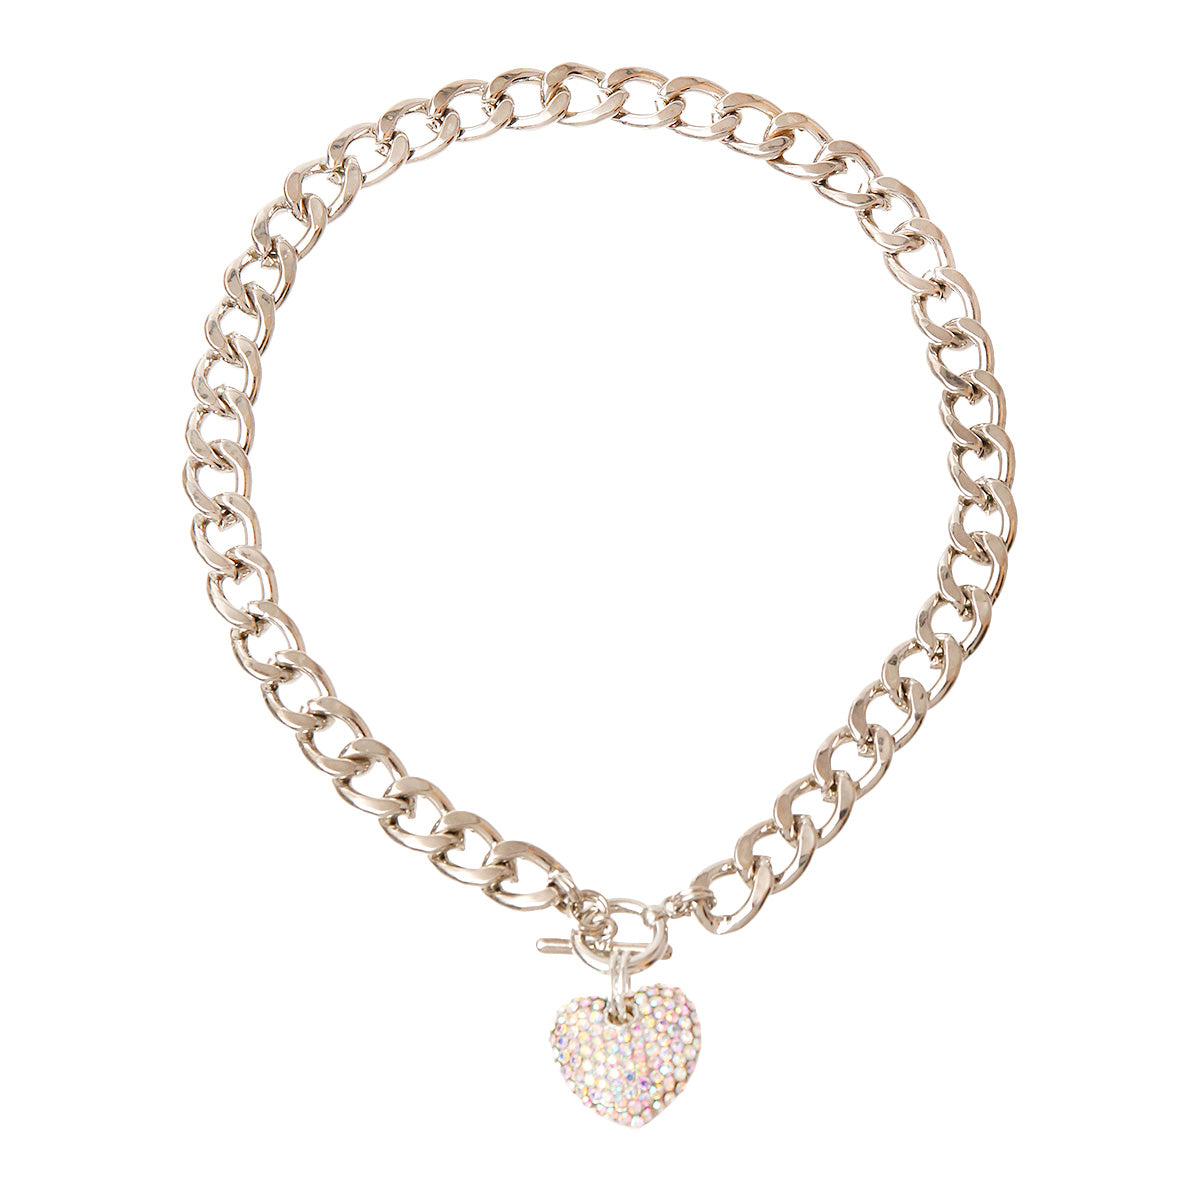 Aurora Borealis and Silver Heart Necklace